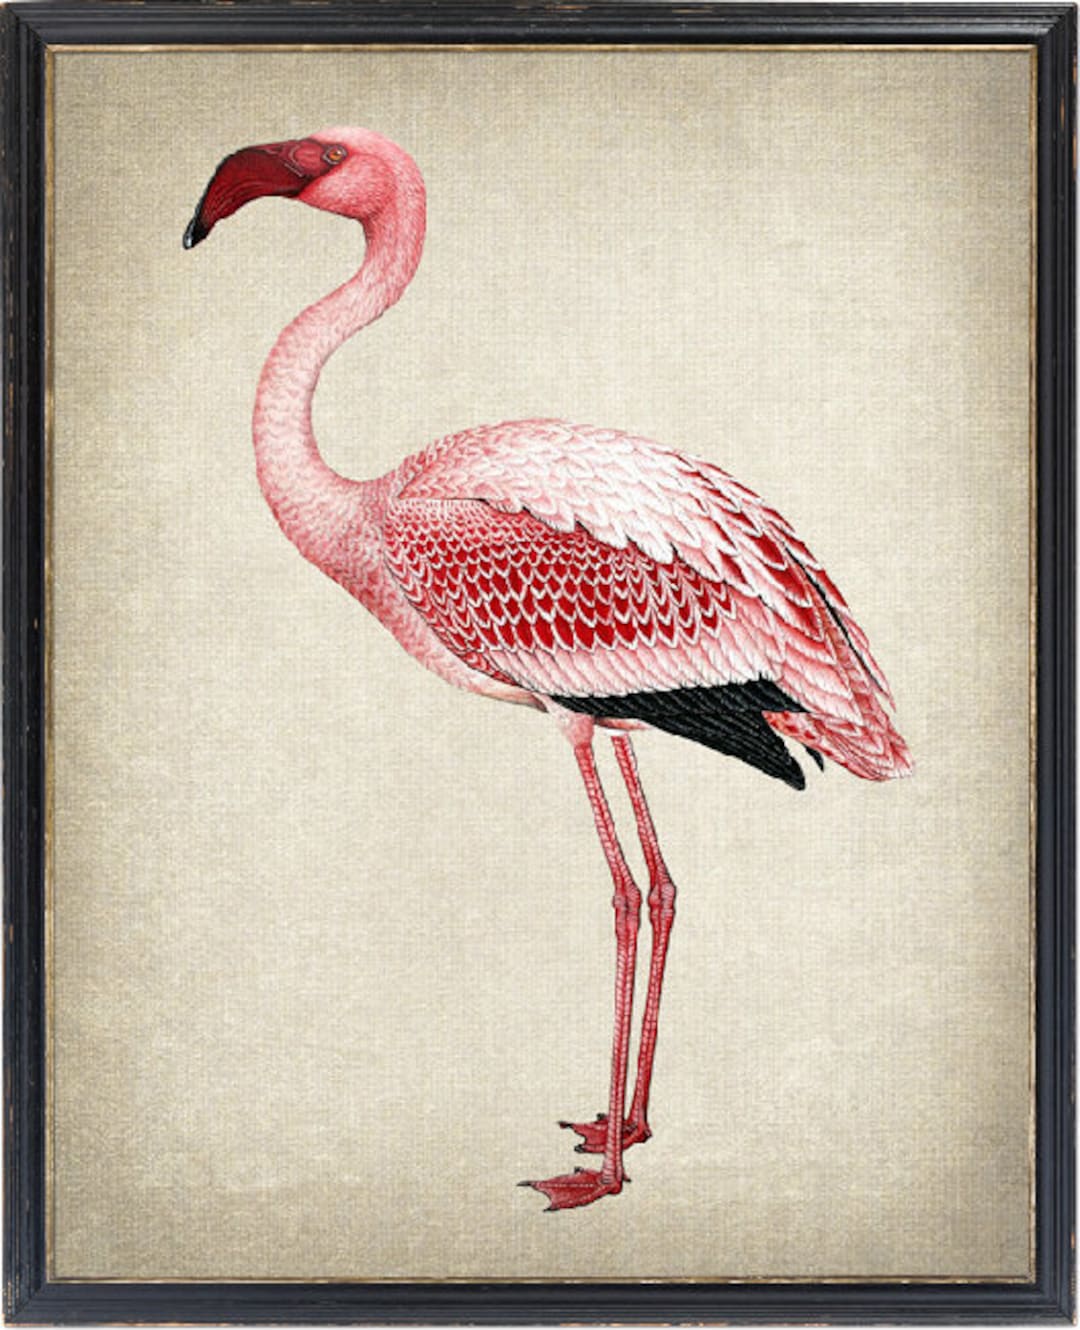 Flamingo Print - Vintage Style - Bird Wall Art - Sage Green